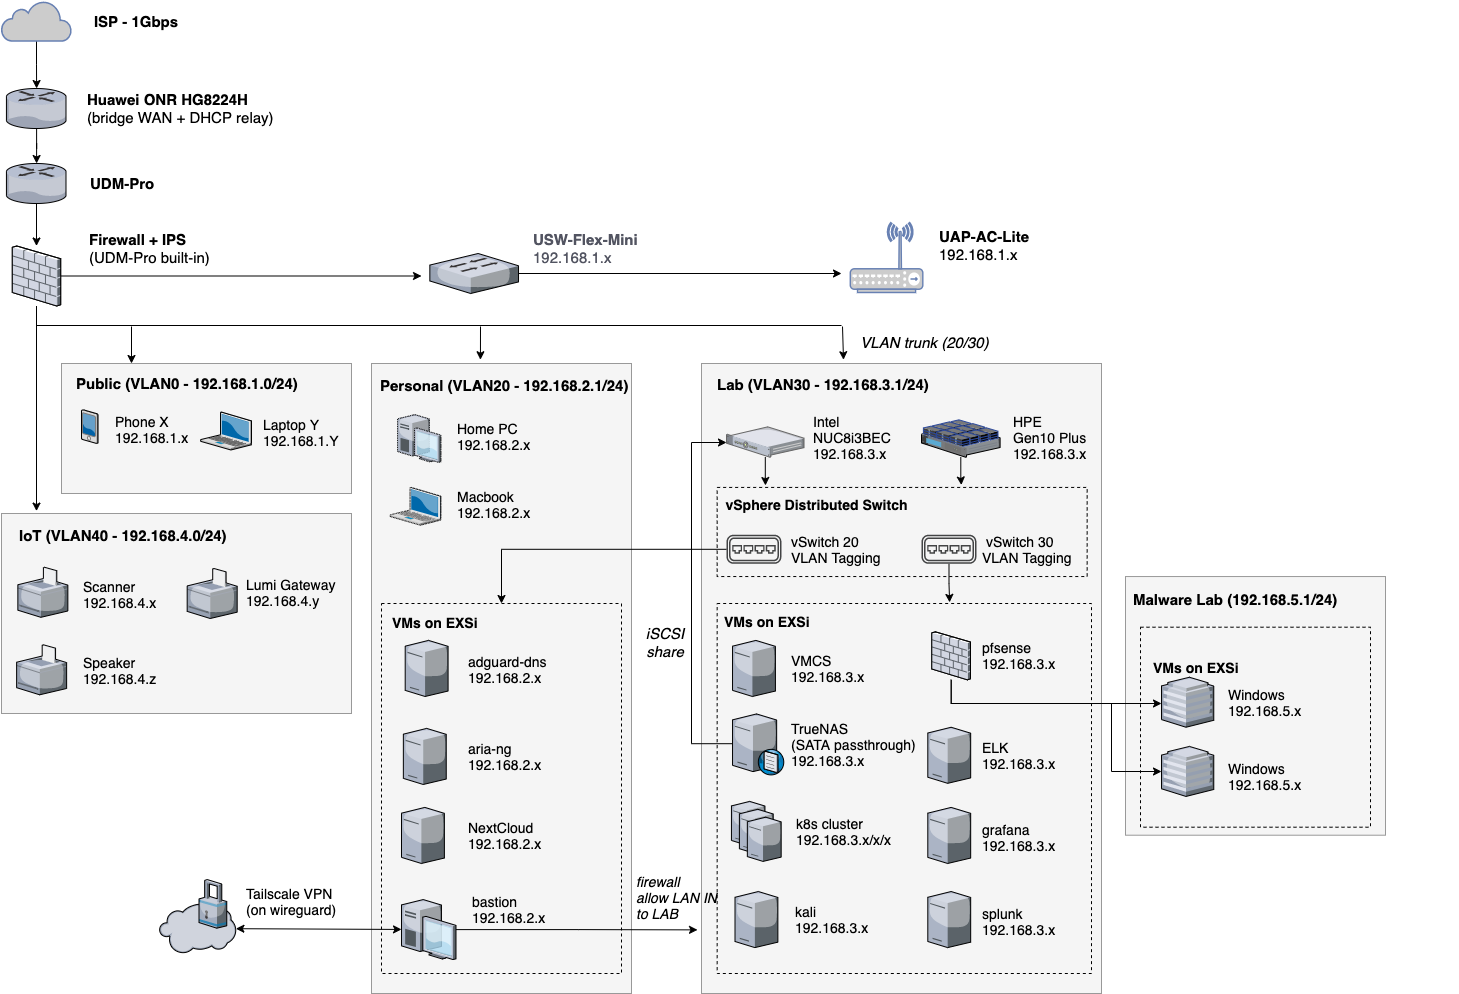 network-diagram